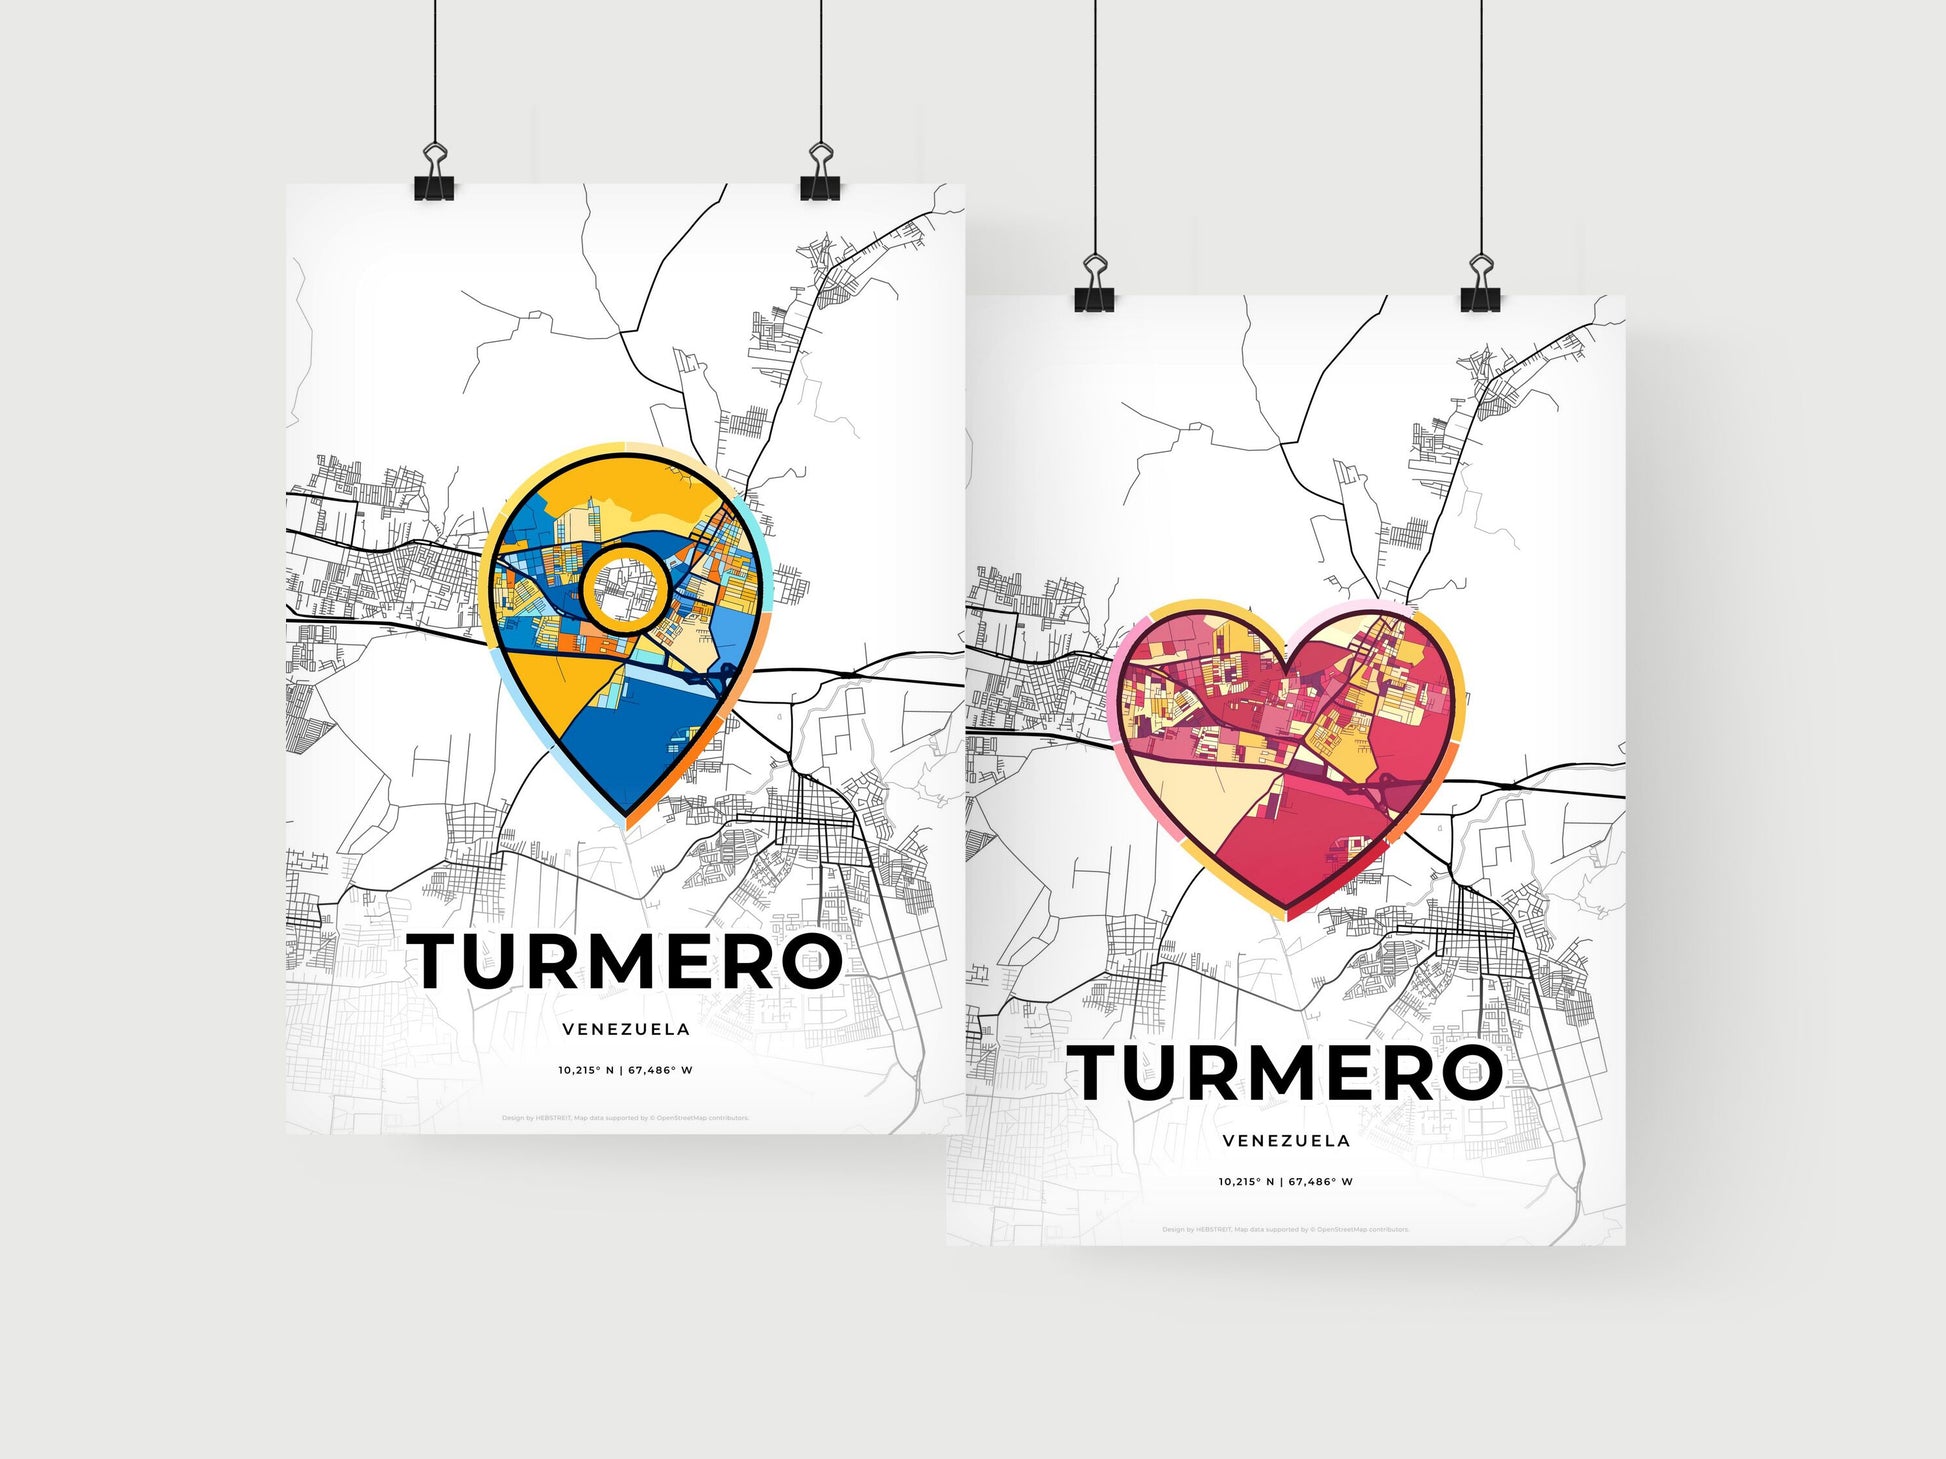 TURMERO VENEZUELA minimal art map with a colorful icon.